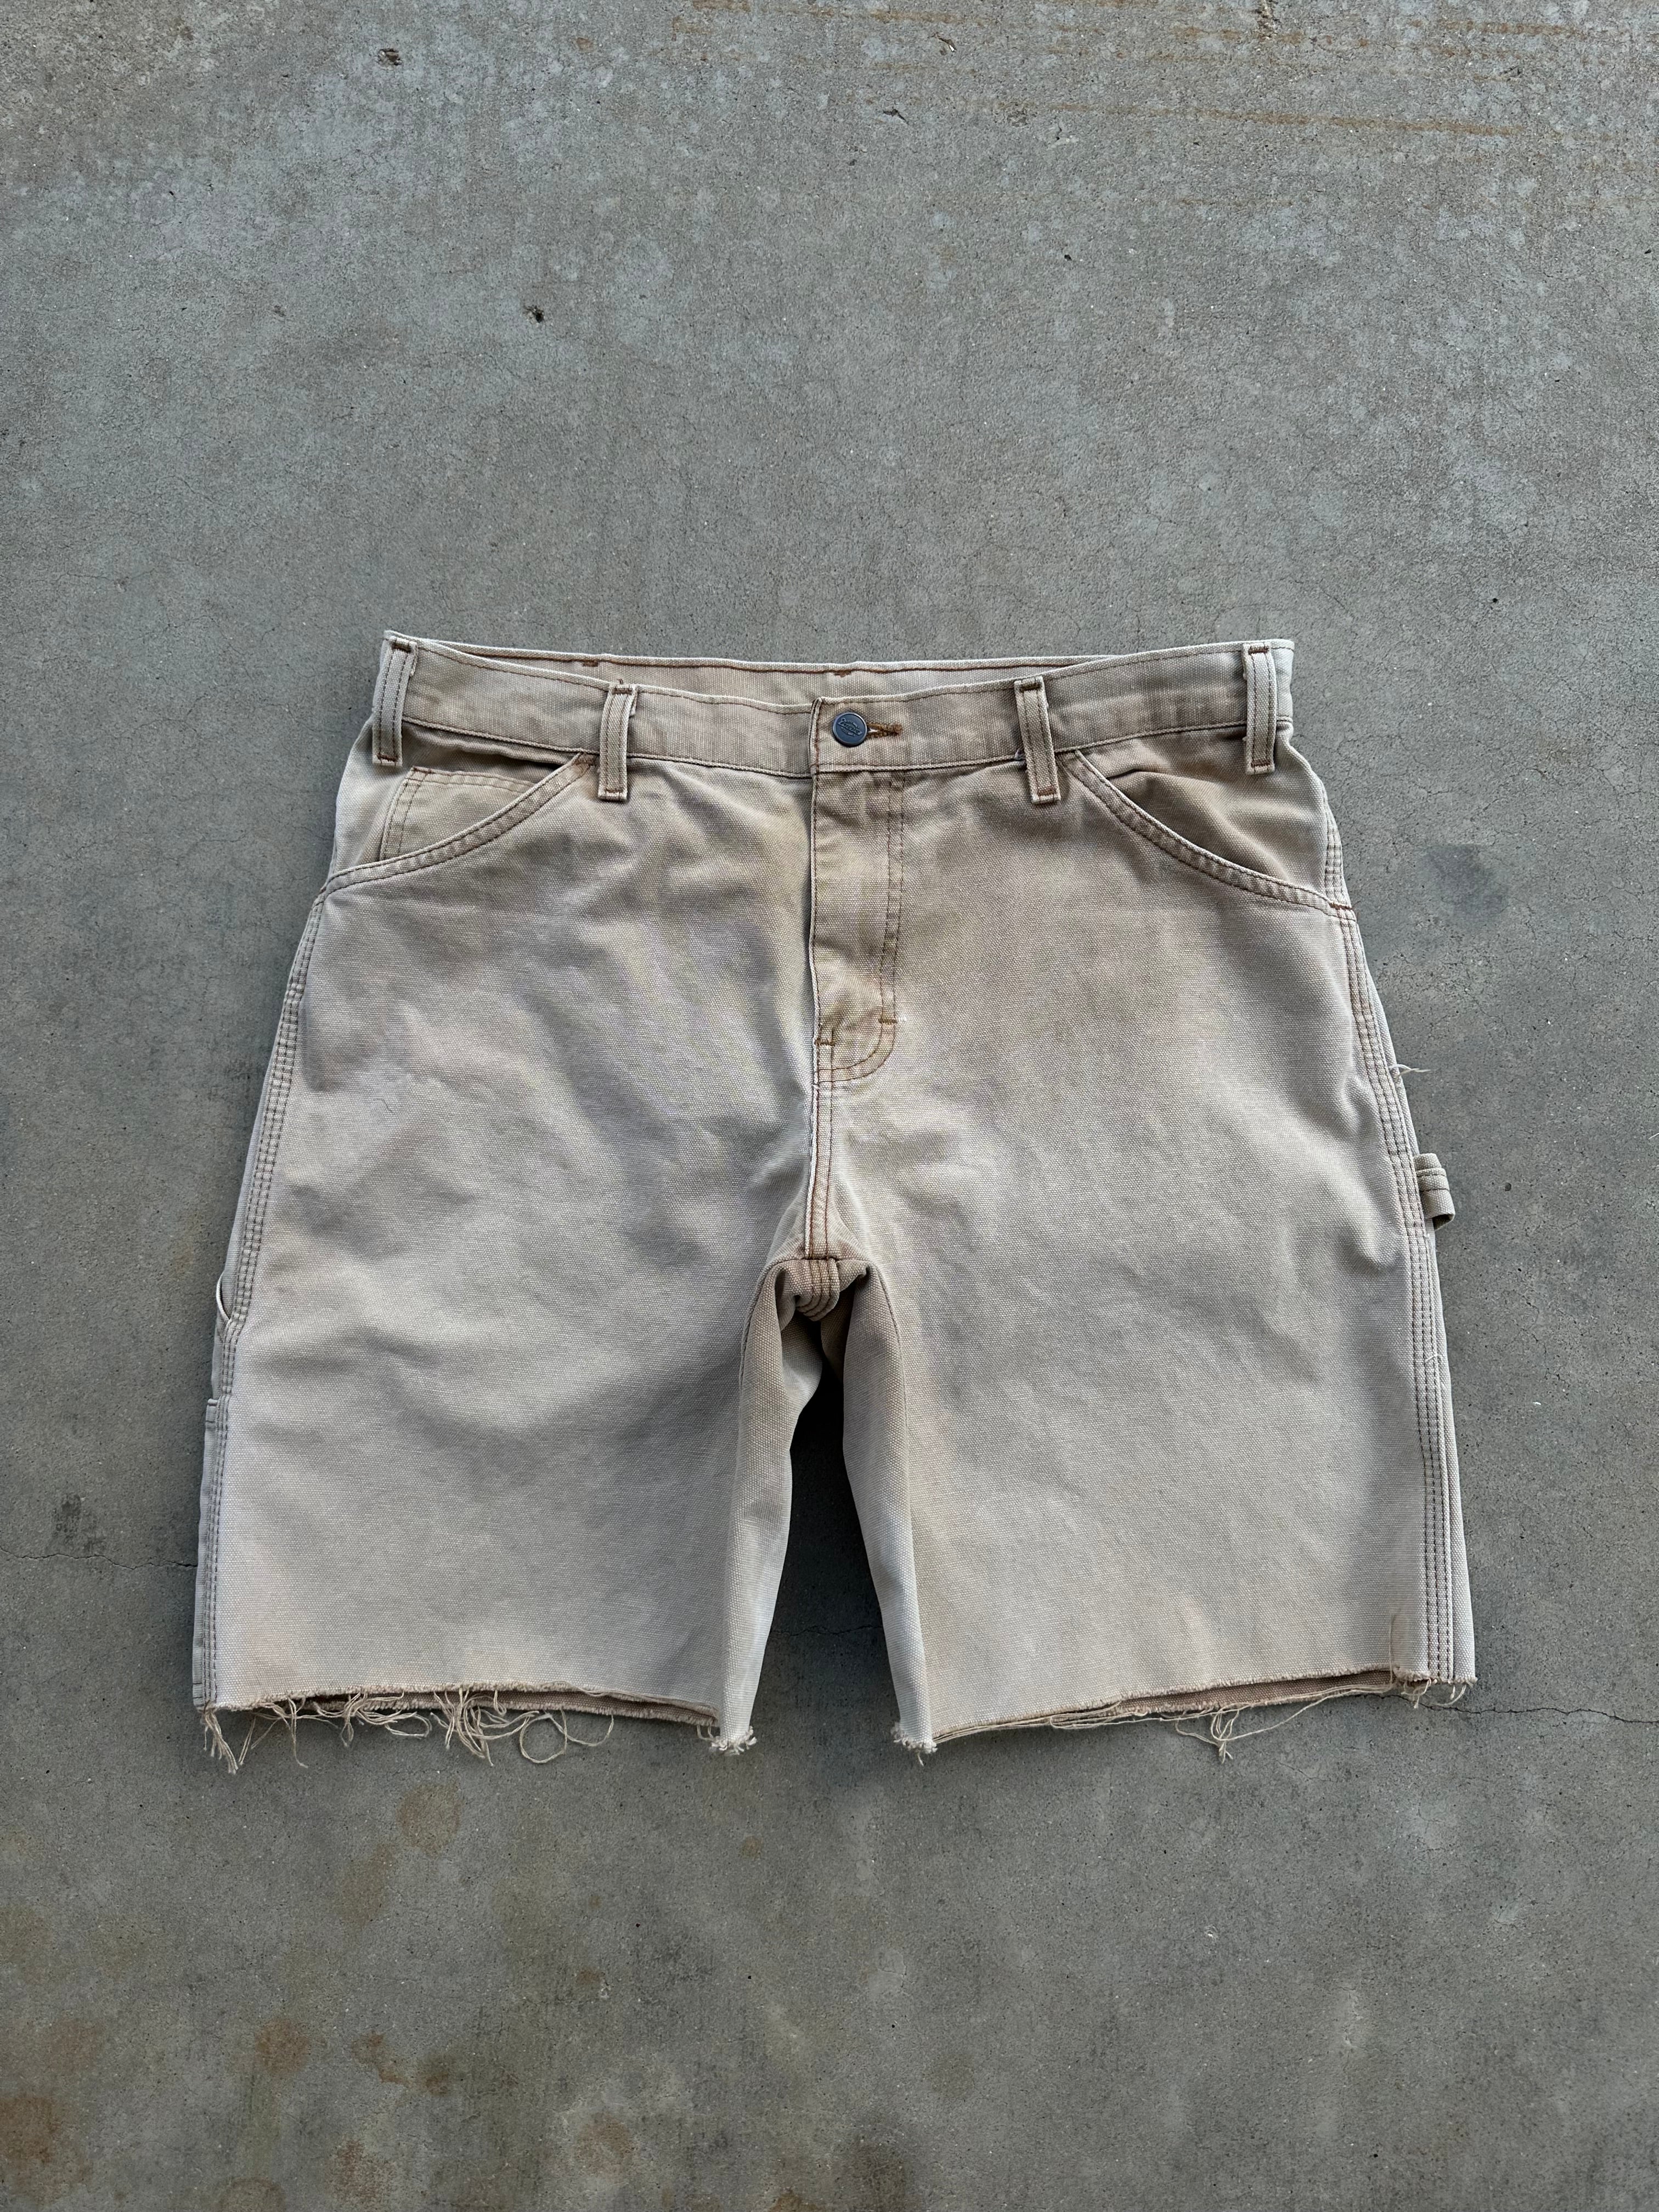 Vintage Sunfaded Dickies Carpenter Shorts (34”x9”)